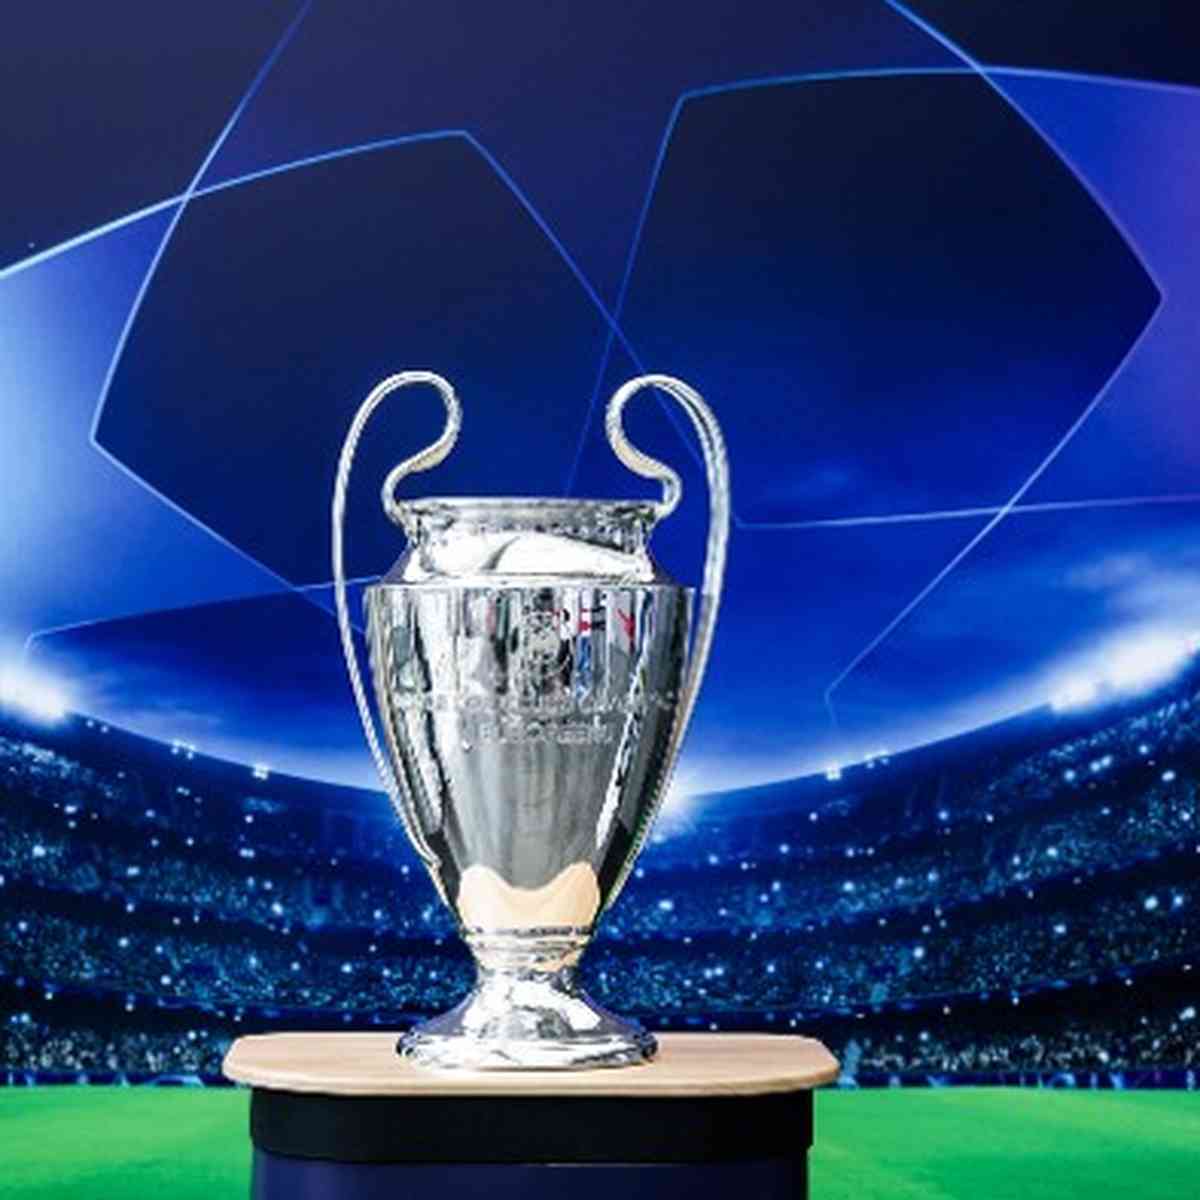 Manchester City e Real Madrid disputam vaga na Champions League